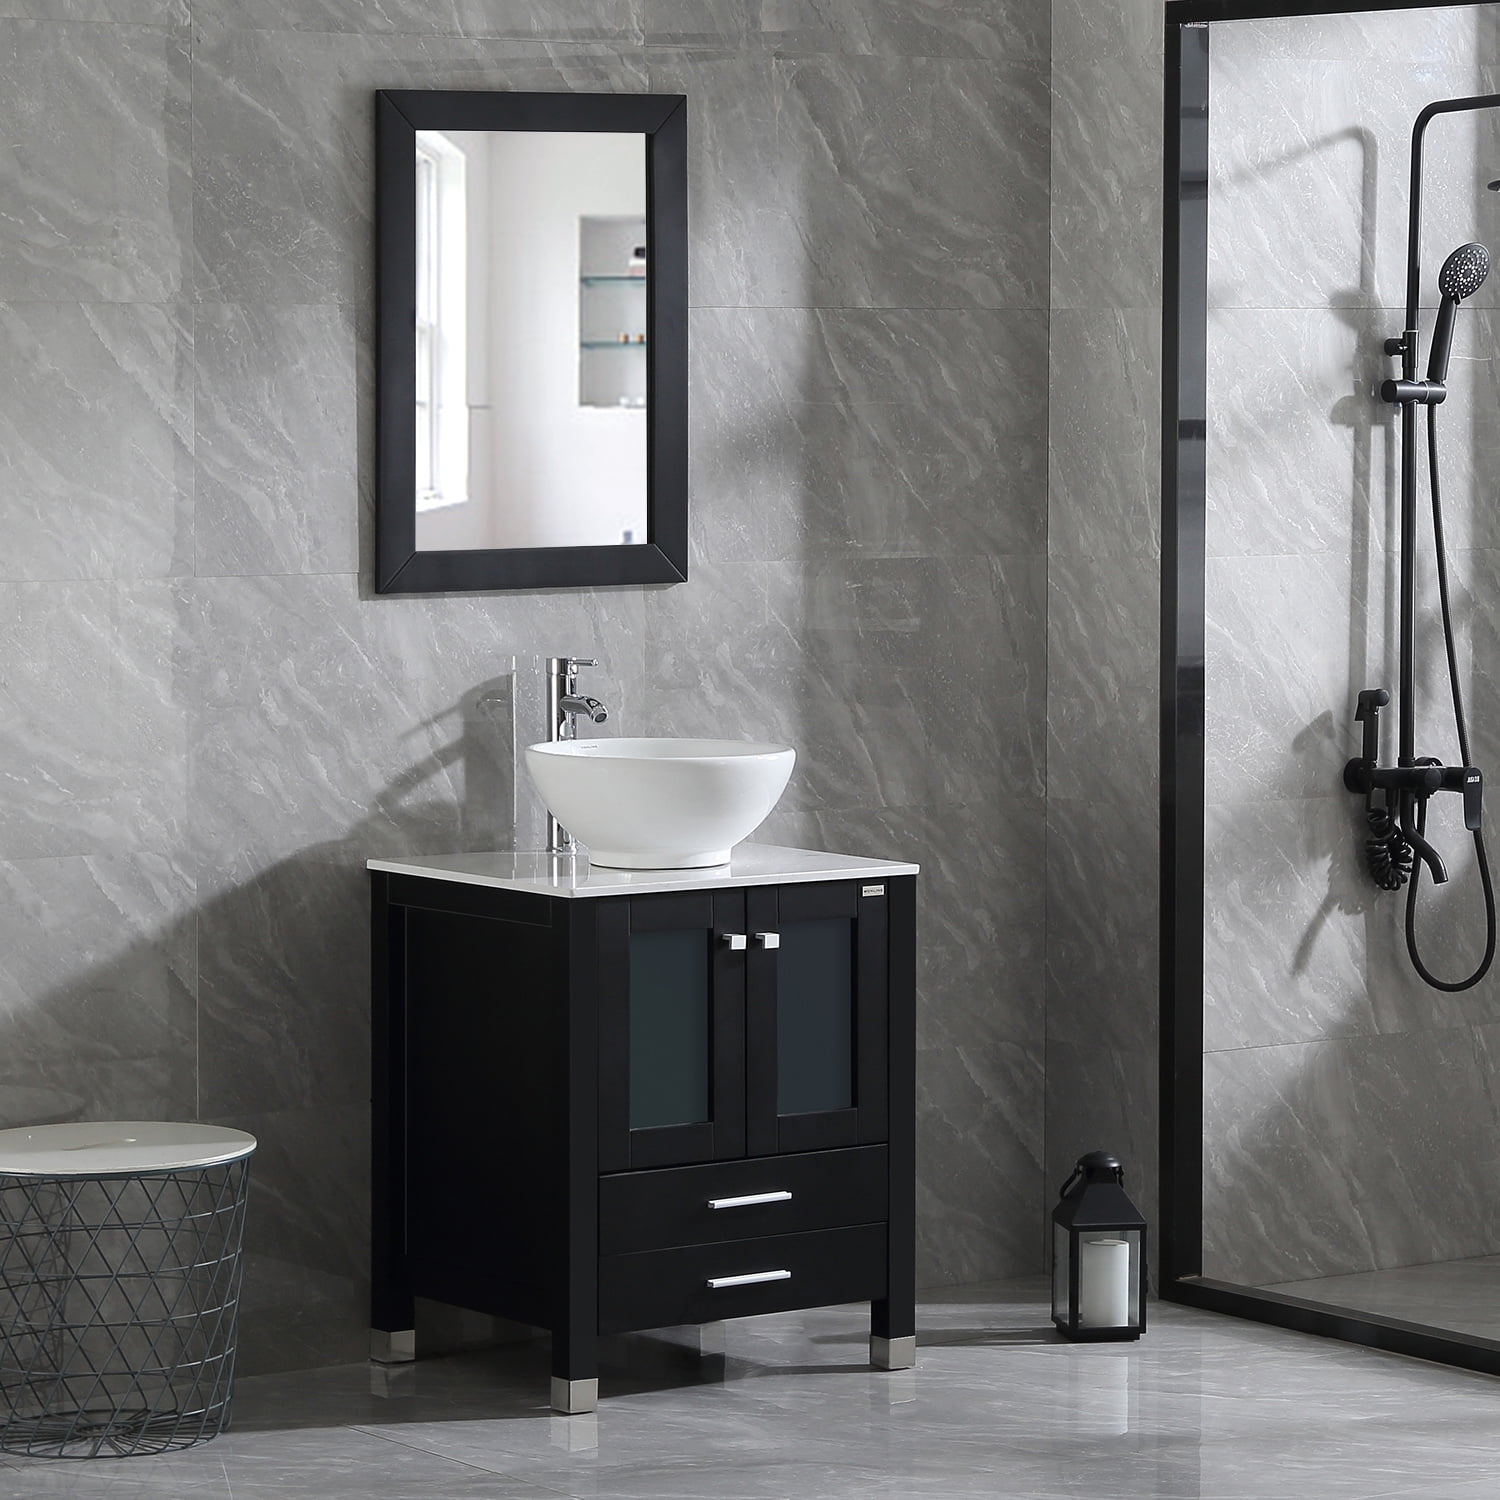 24" Bathroom Vanity Cabinet W/ Mirror Rectangl Ceramic Sink Faucet Combo Brown 